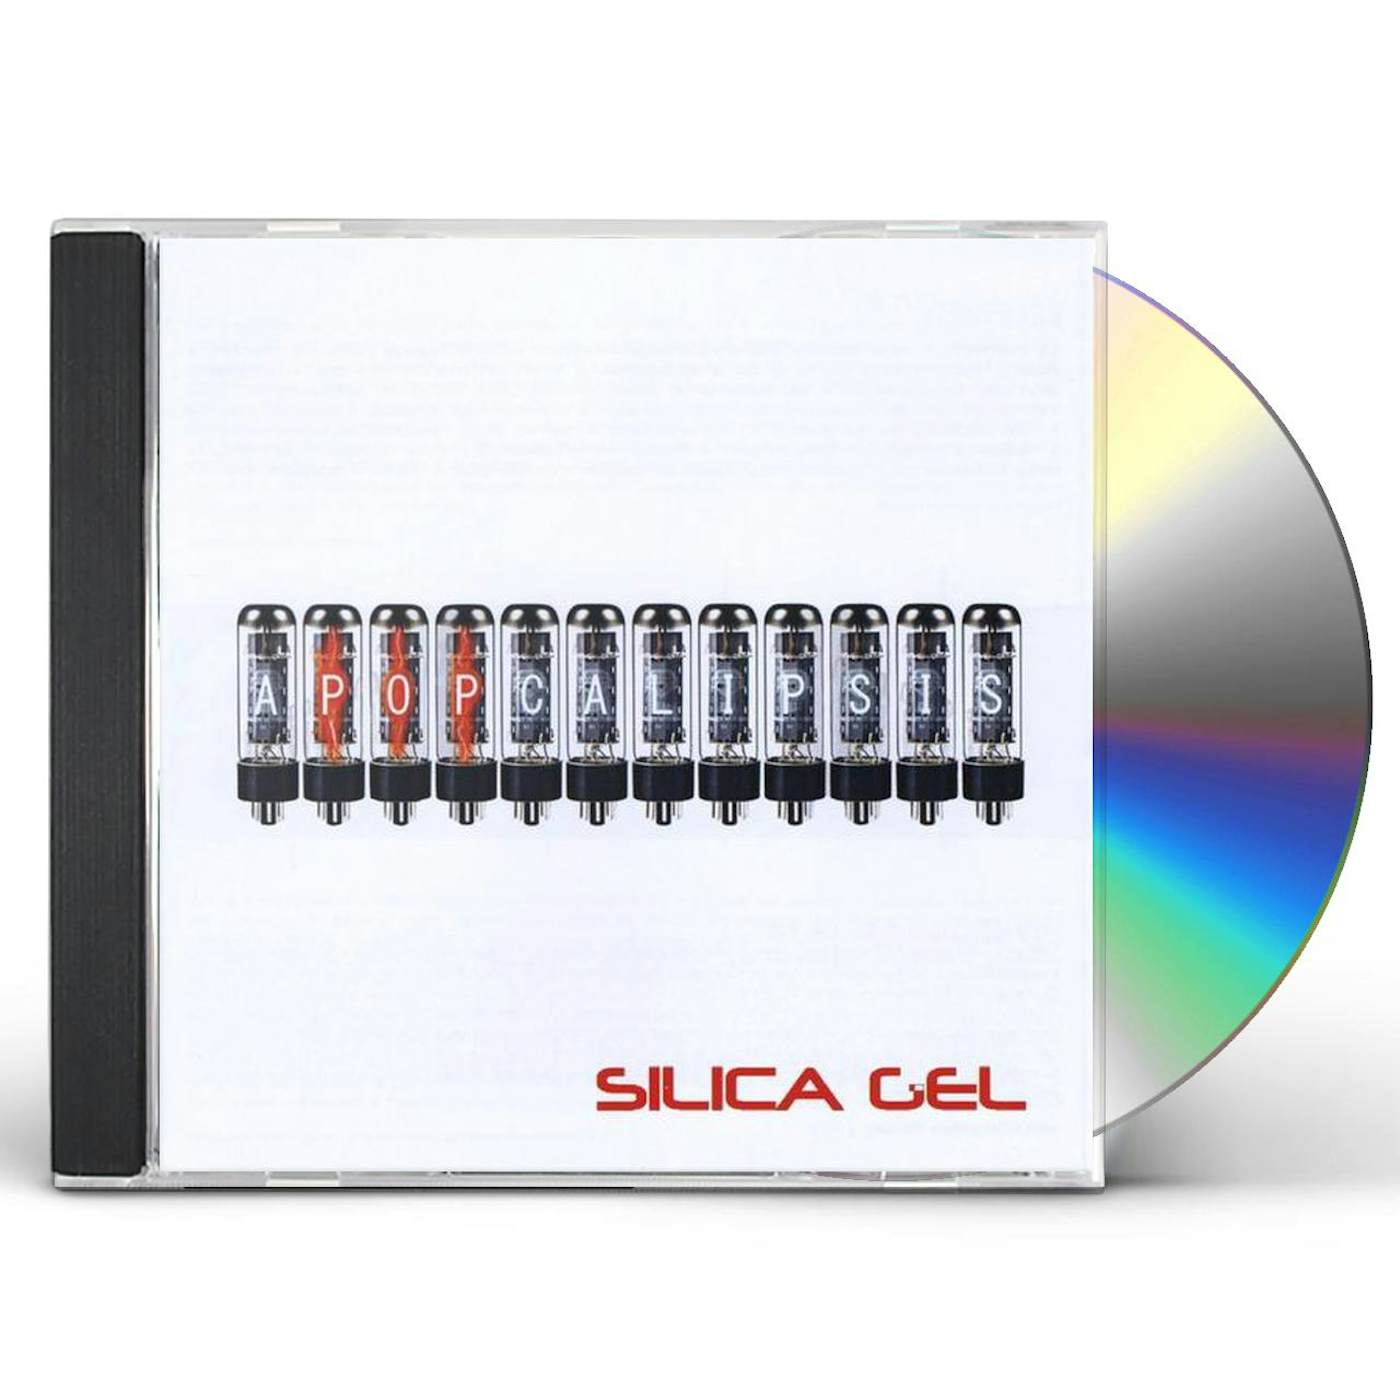 Silica Gel APOPCALIPSIS CD